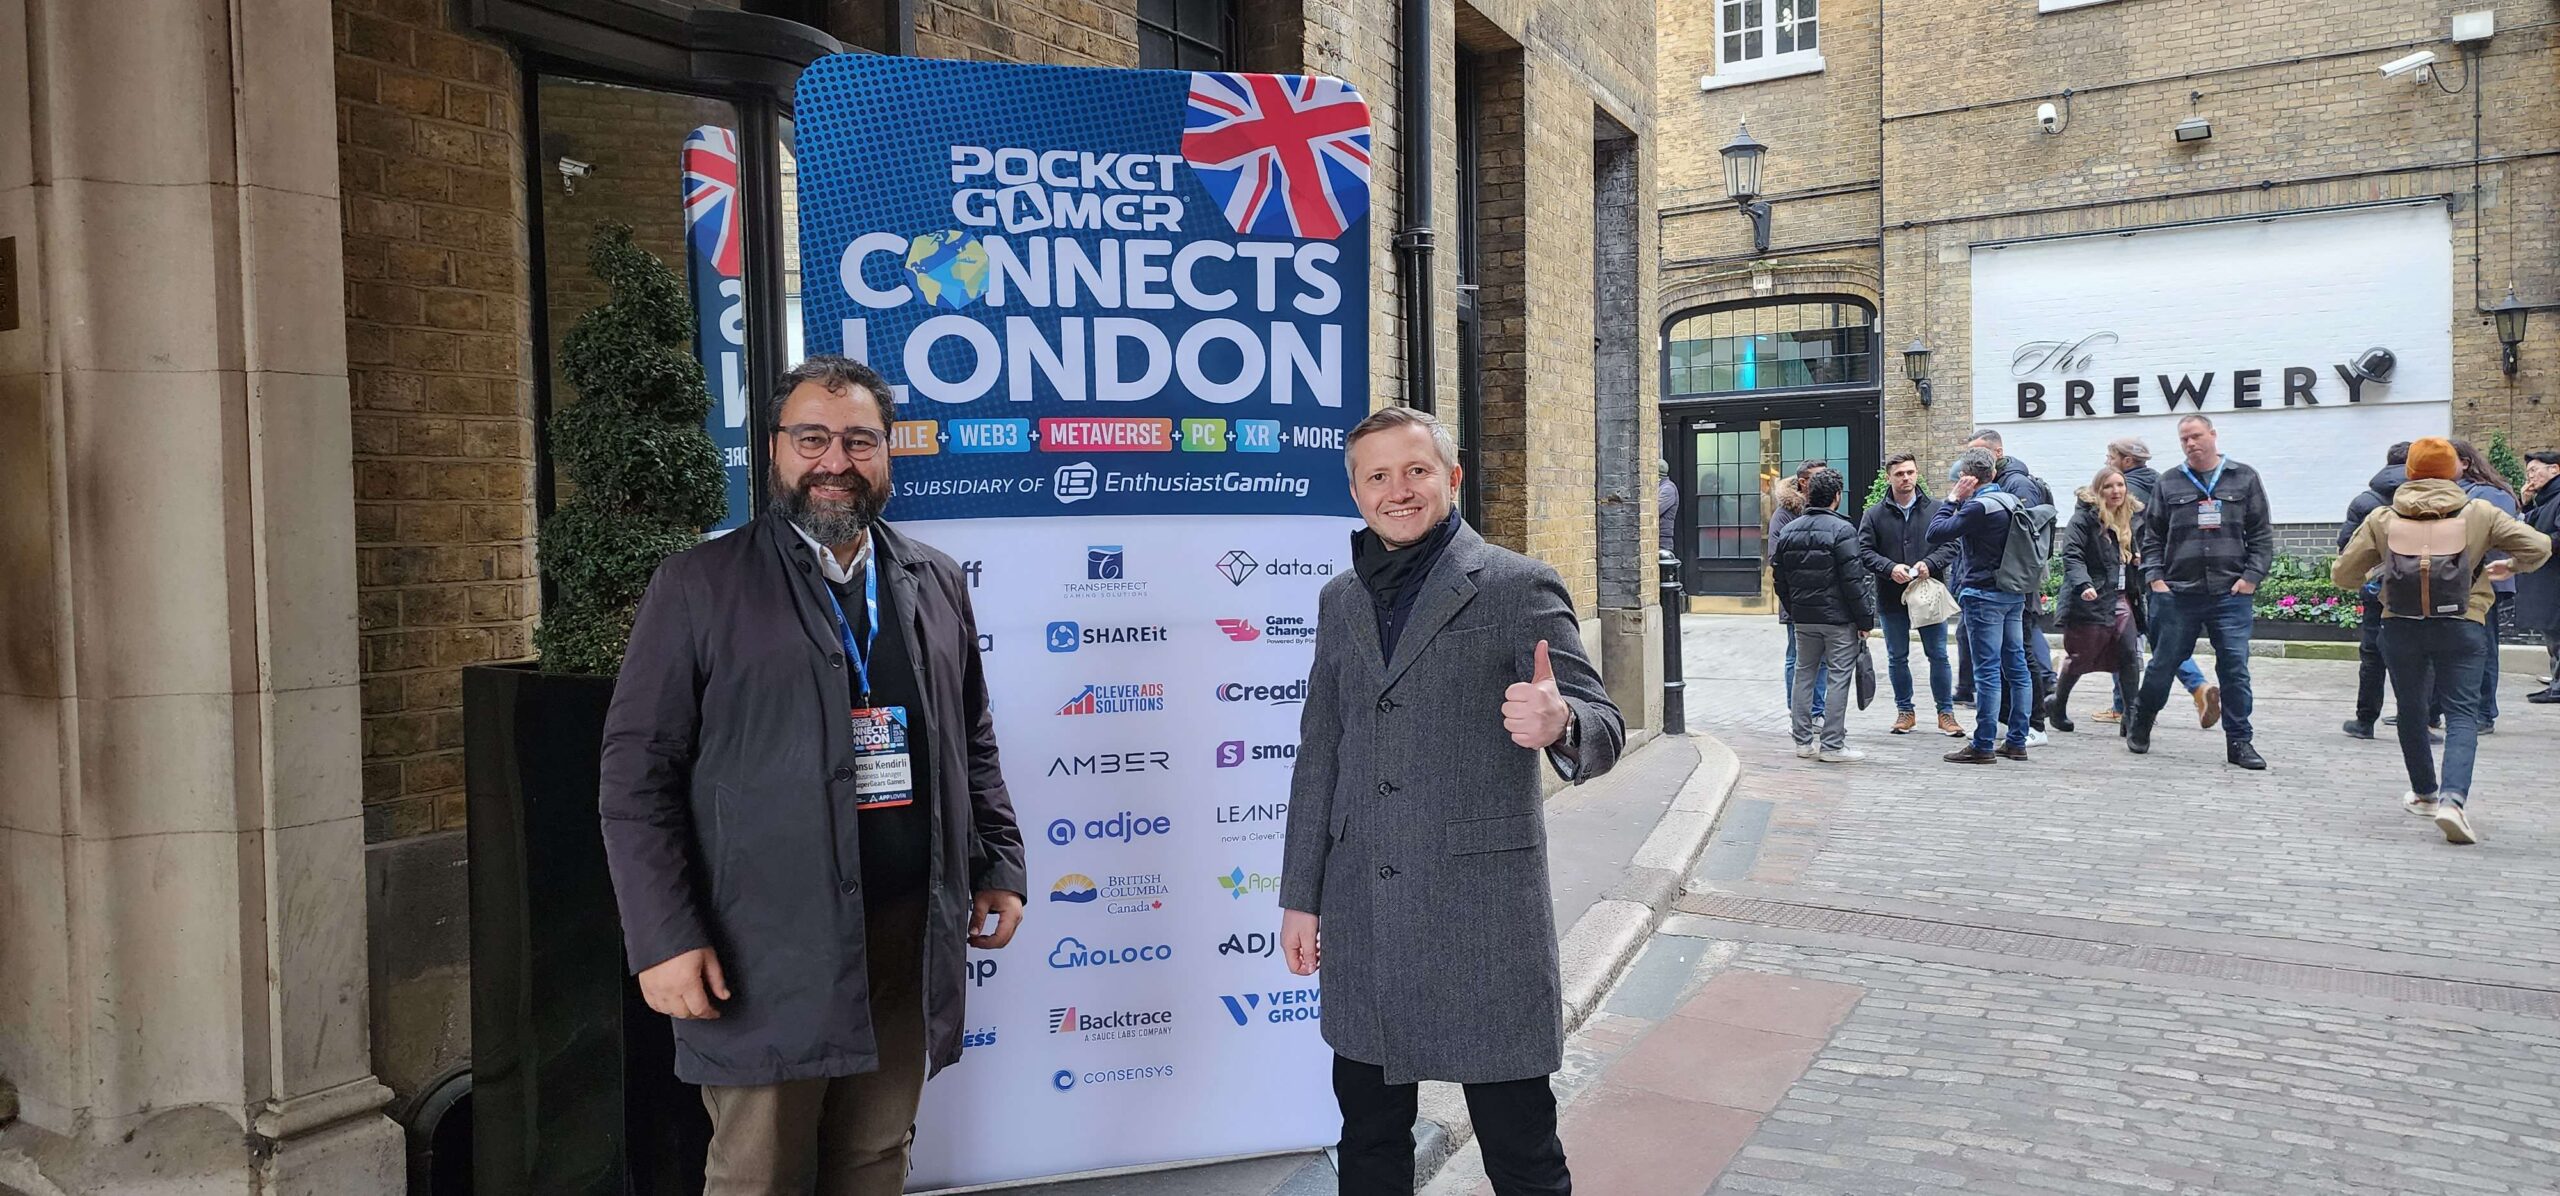 Londra’da Pocket Gamer Connect’de yer aldık!